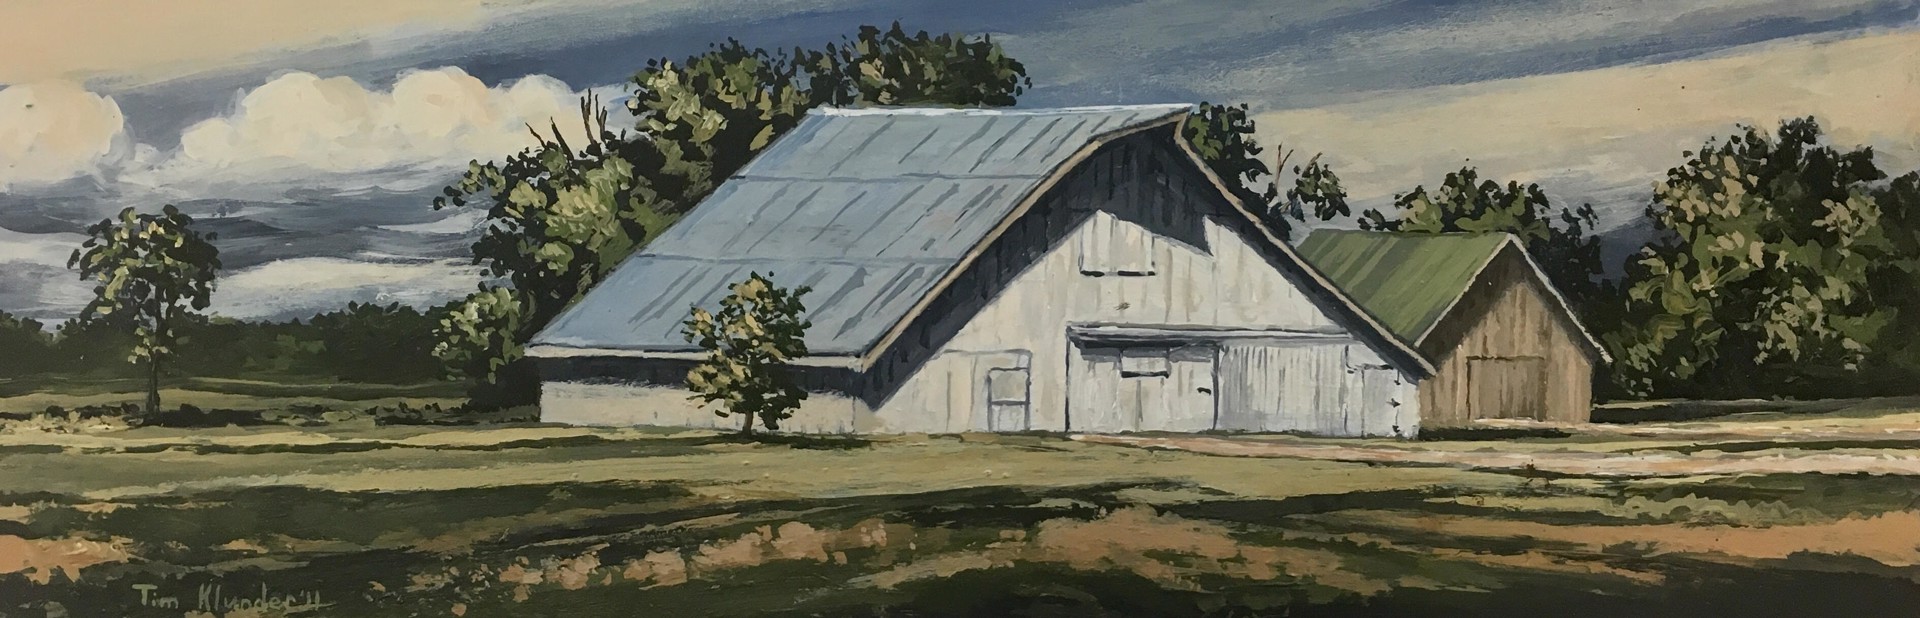 Barn, Southeastern Nebraska by Tim Klunder